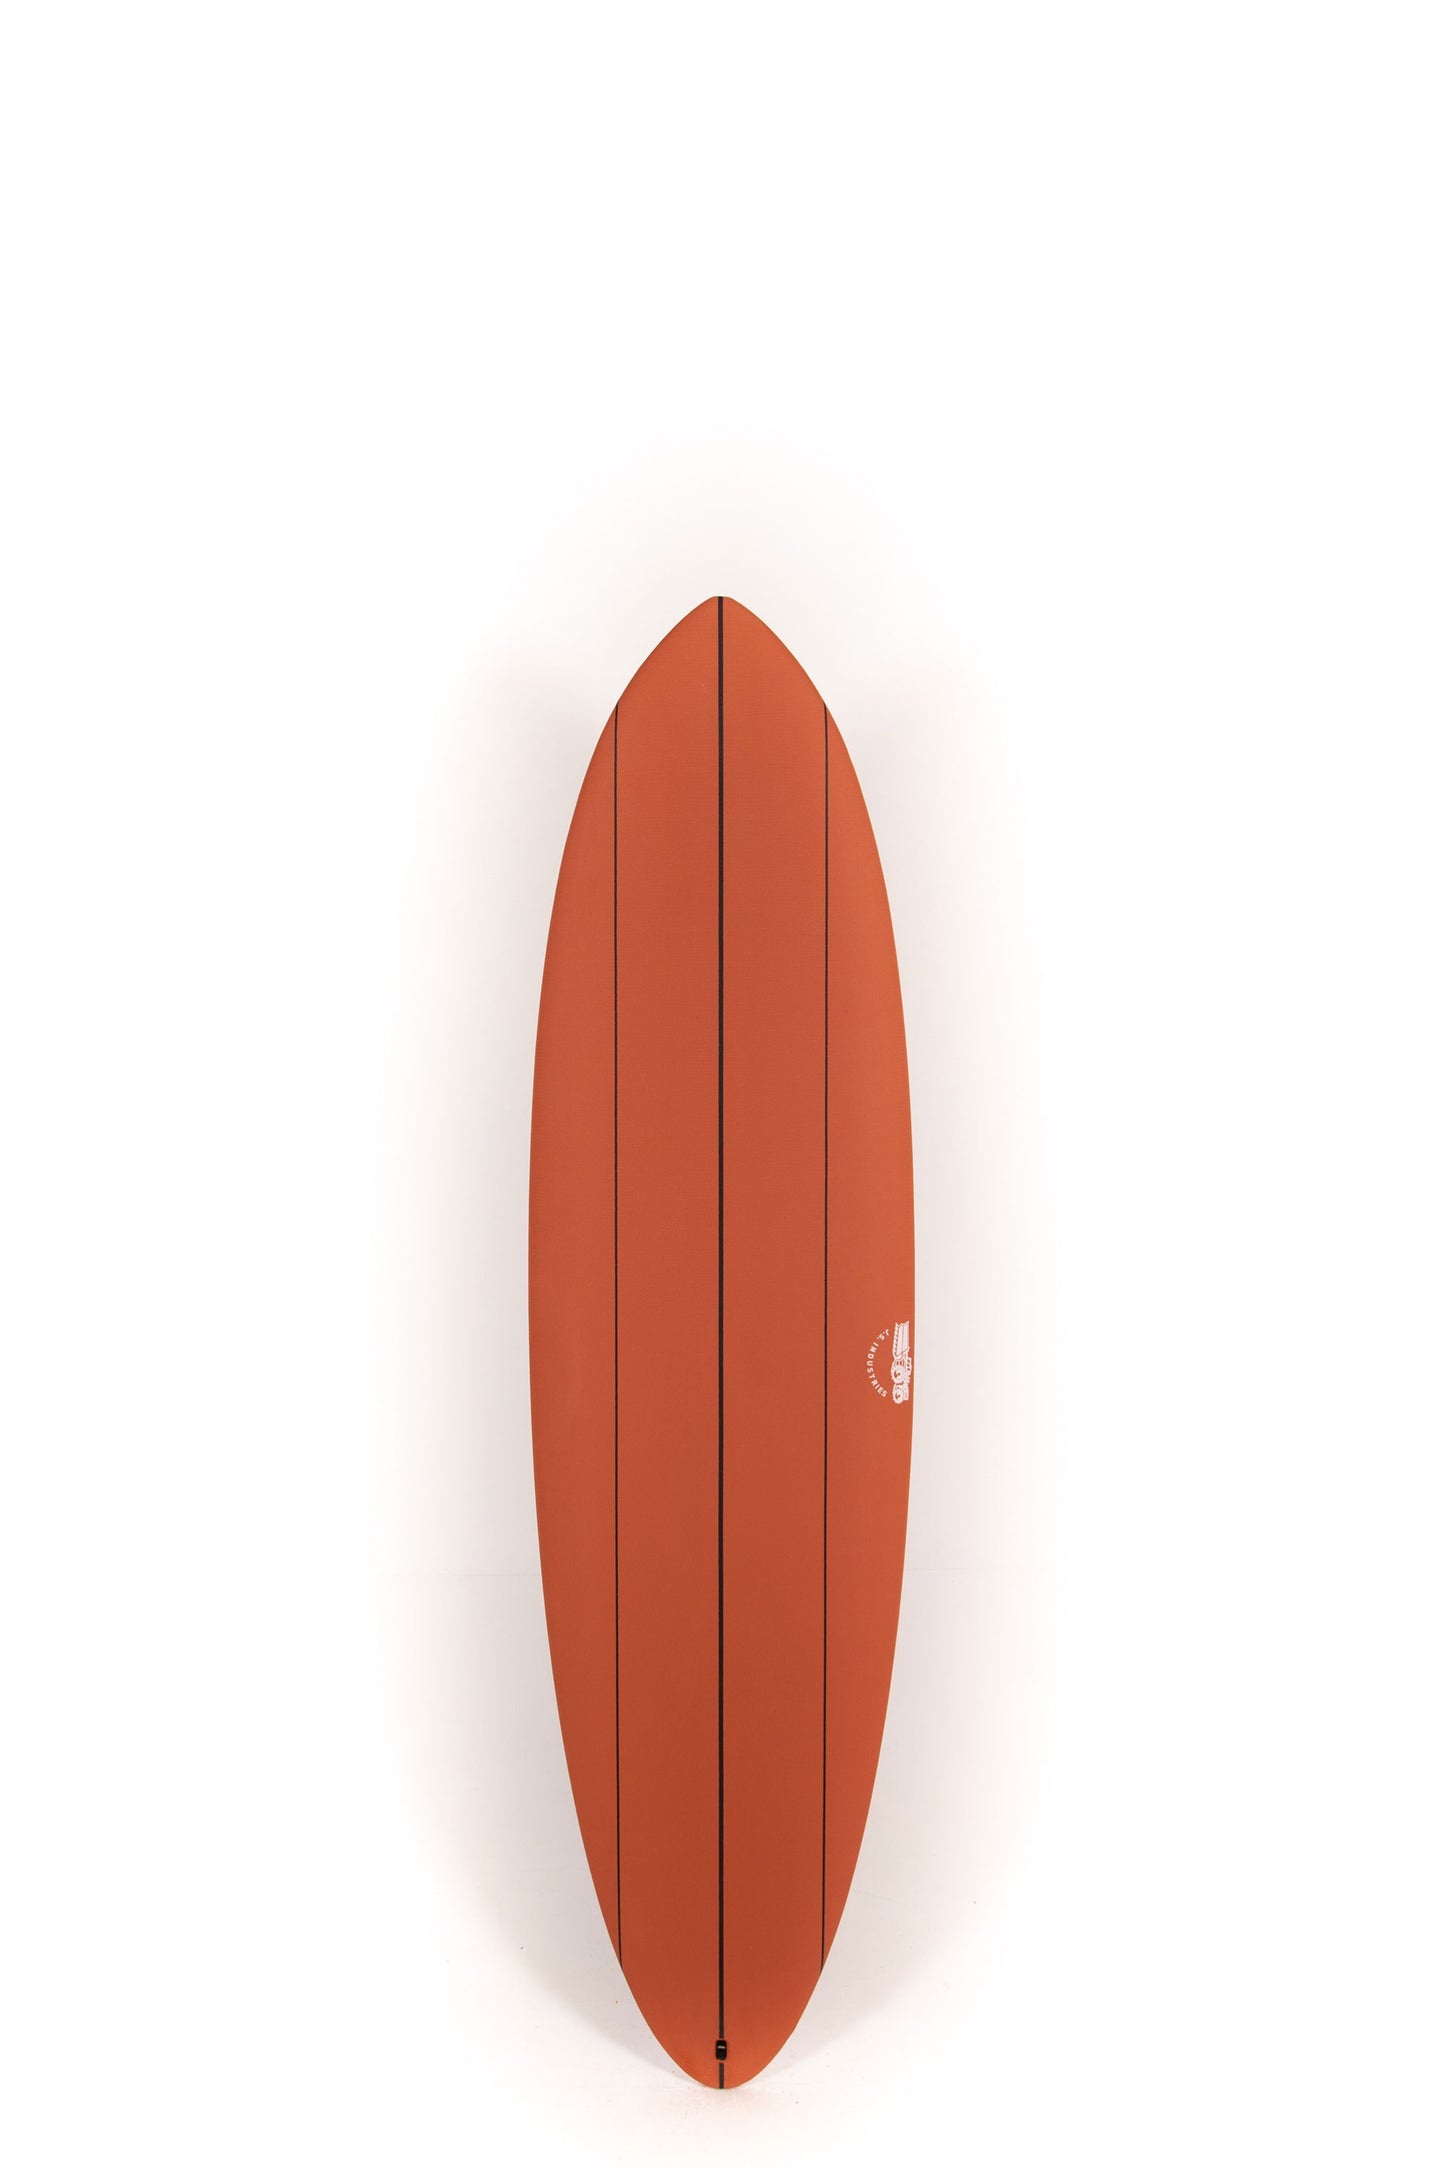 Pukas Surf Shop - JS Surfboards - BIG BARON SOFT - 6'8" x 20 3/4 x  2 5/8 x 40,20L. - JSBBBM68